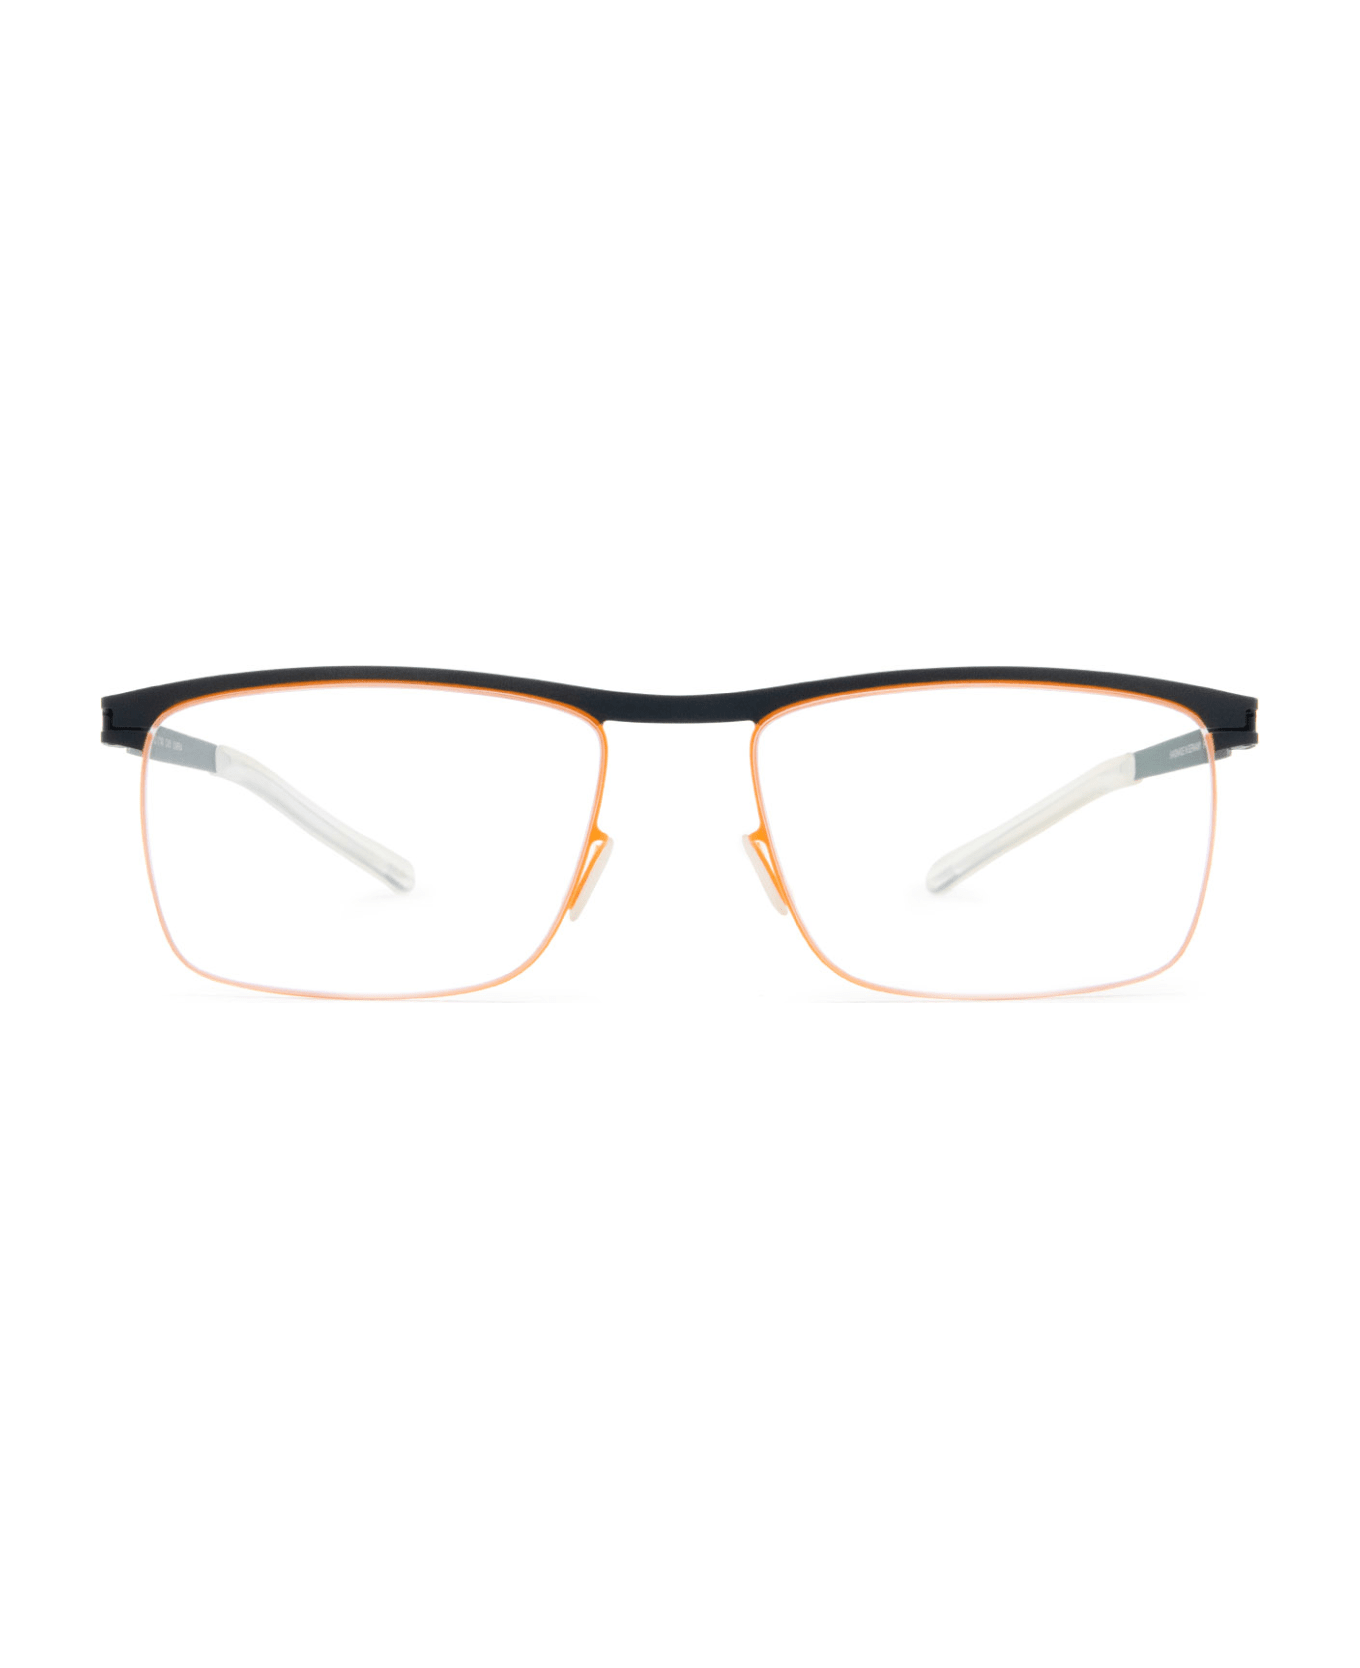 Mykita Darcy Indigo/orange Glasses - Indigo/Orange アイウェア